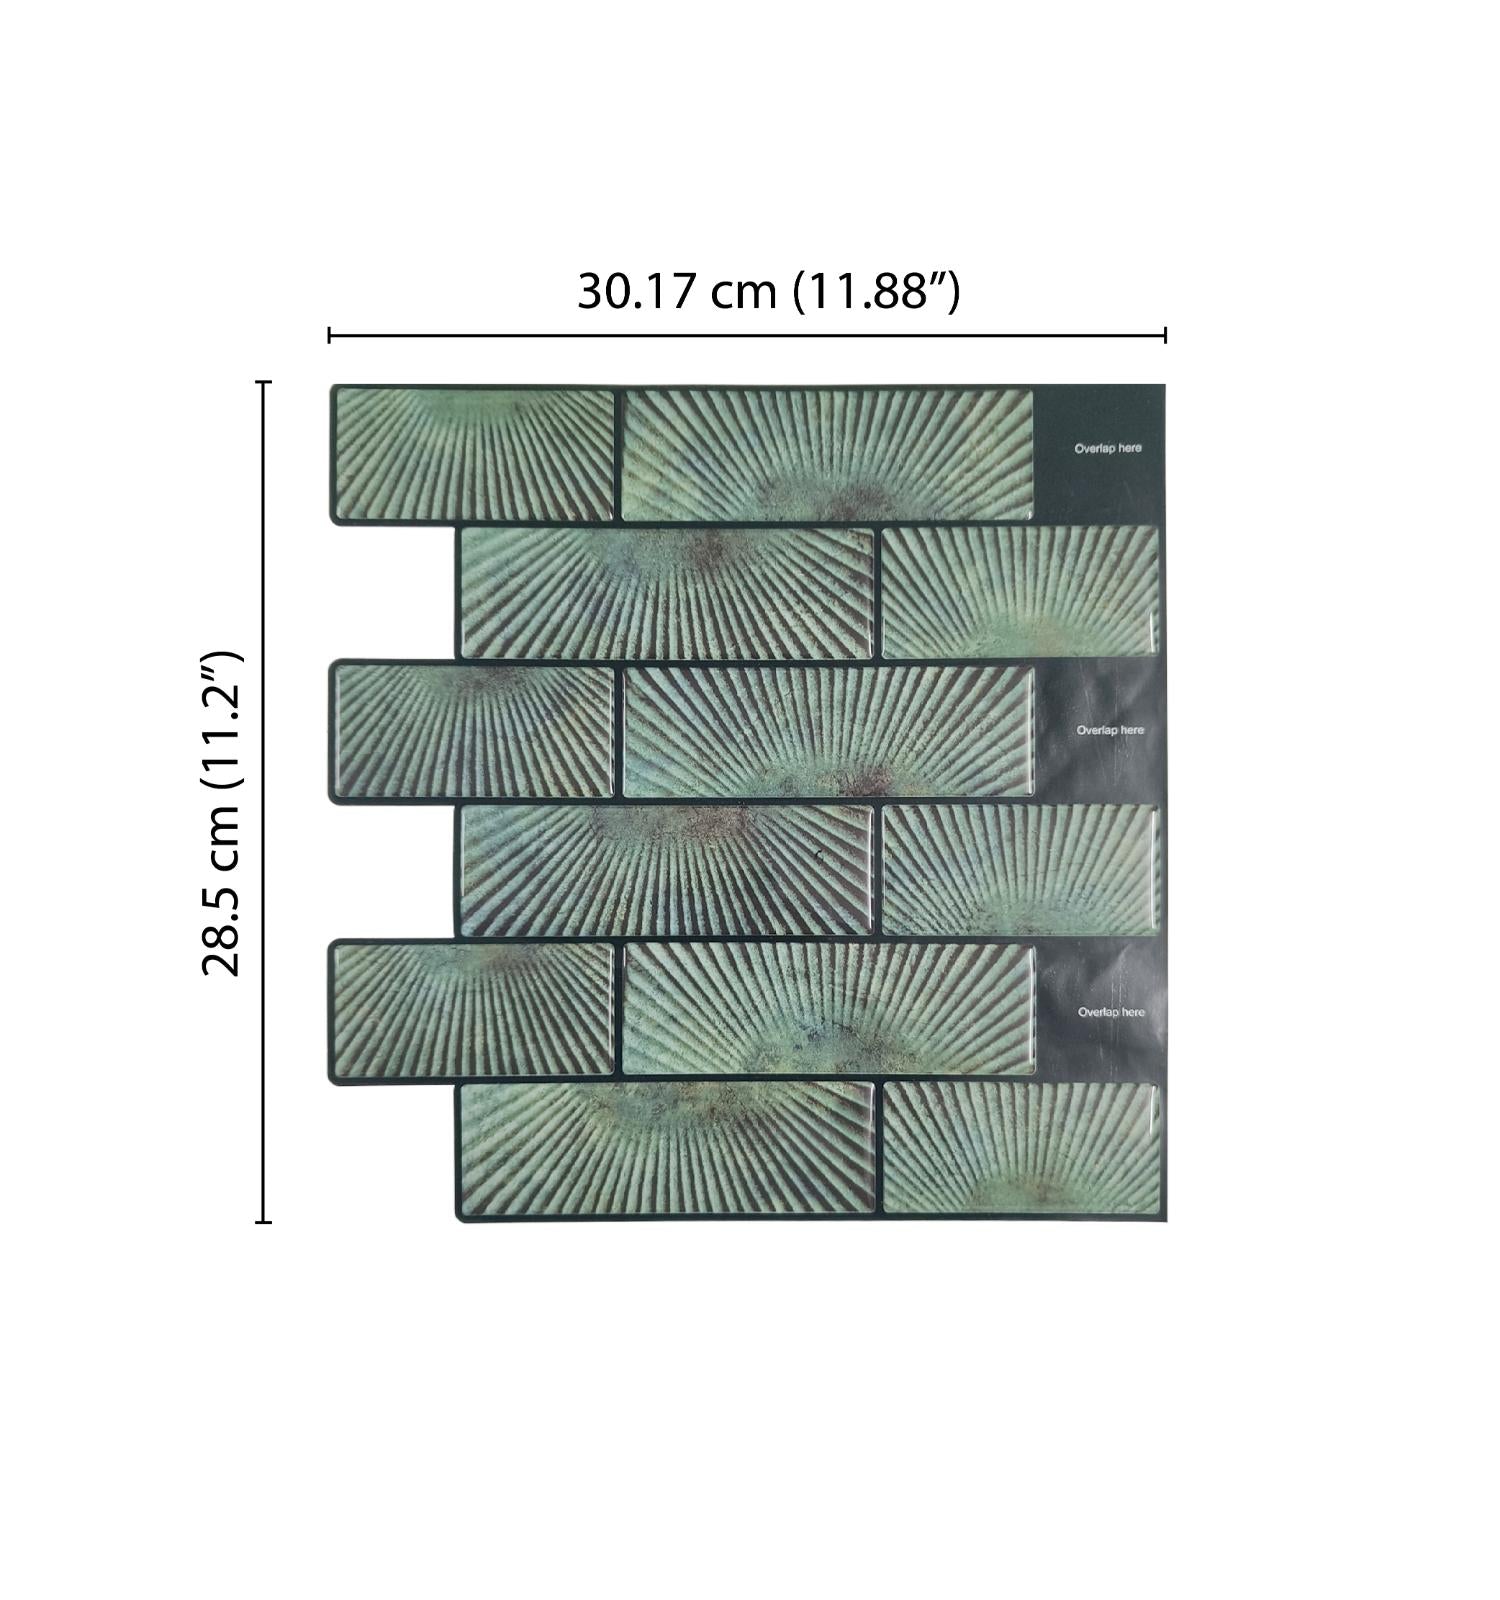 Sage Green Subway Peel and Stick Wall Tile | Kitchen Backsplash Tiles | Self Adhesive Tiles For Home Decor